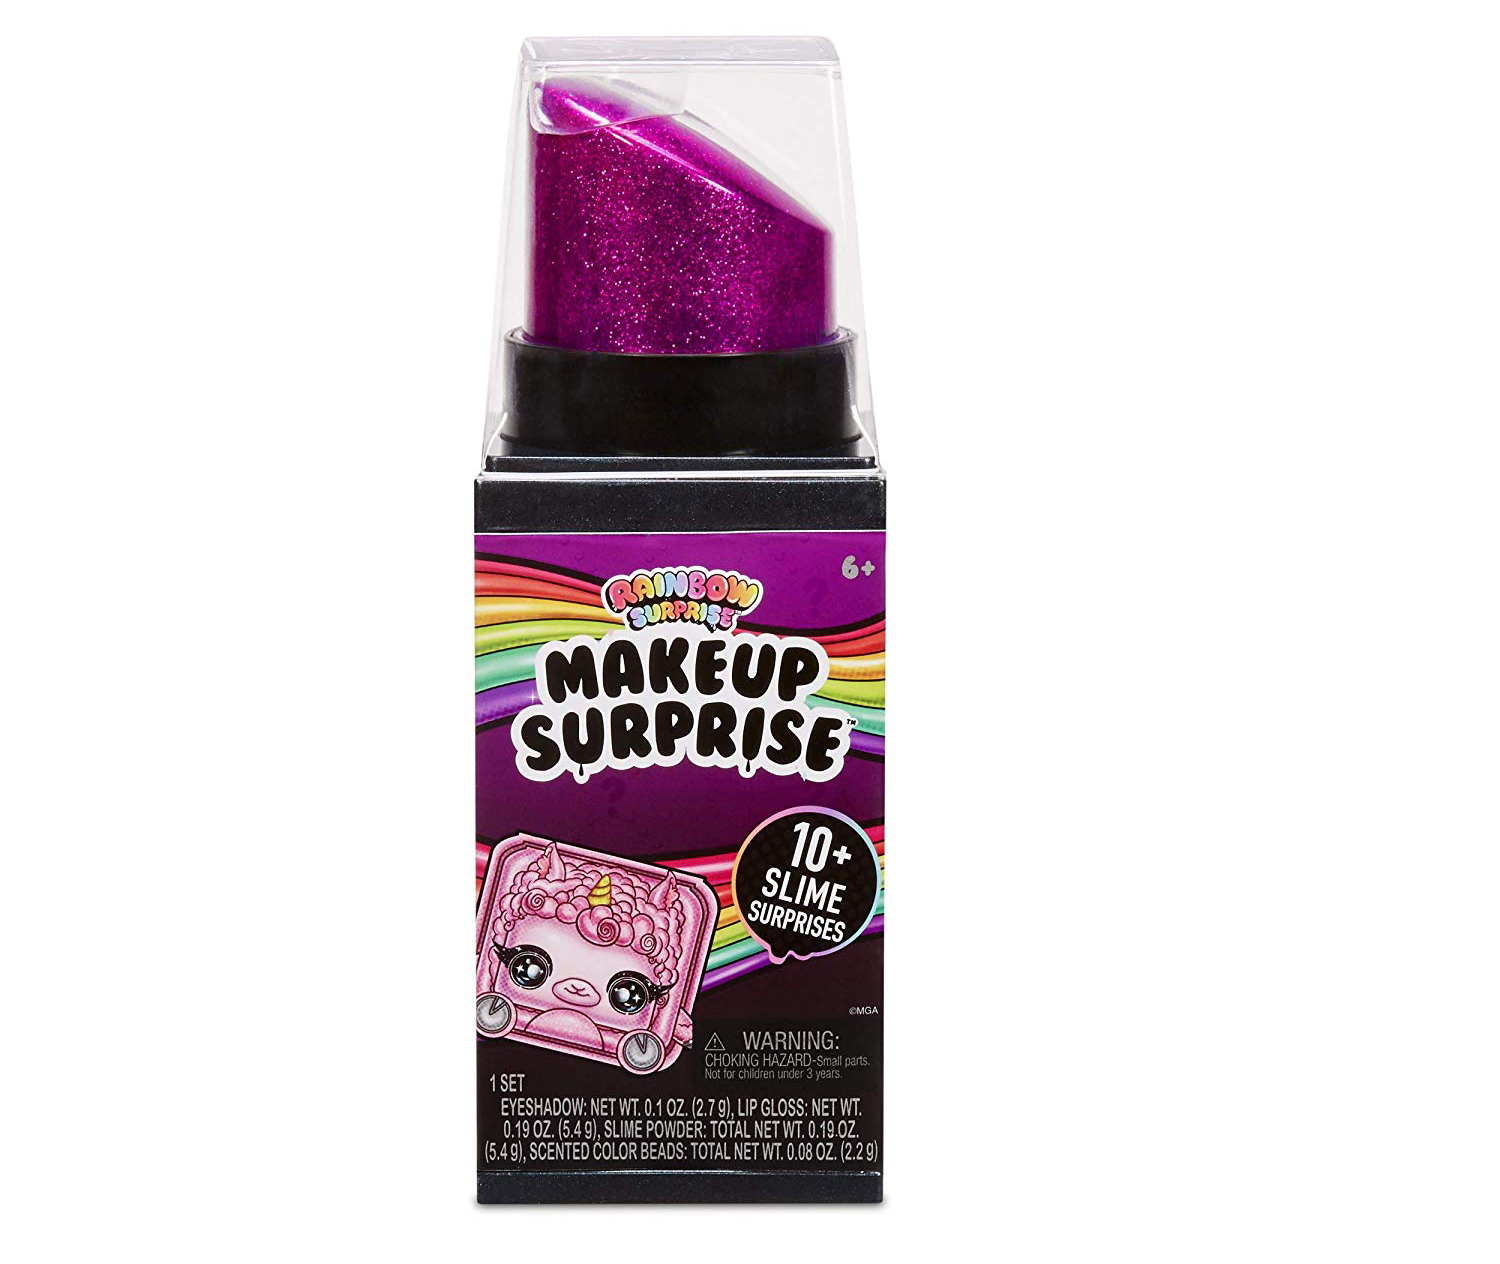 Poopsie Rainbow Surprise Makeup Surprise Series 2 is out! 